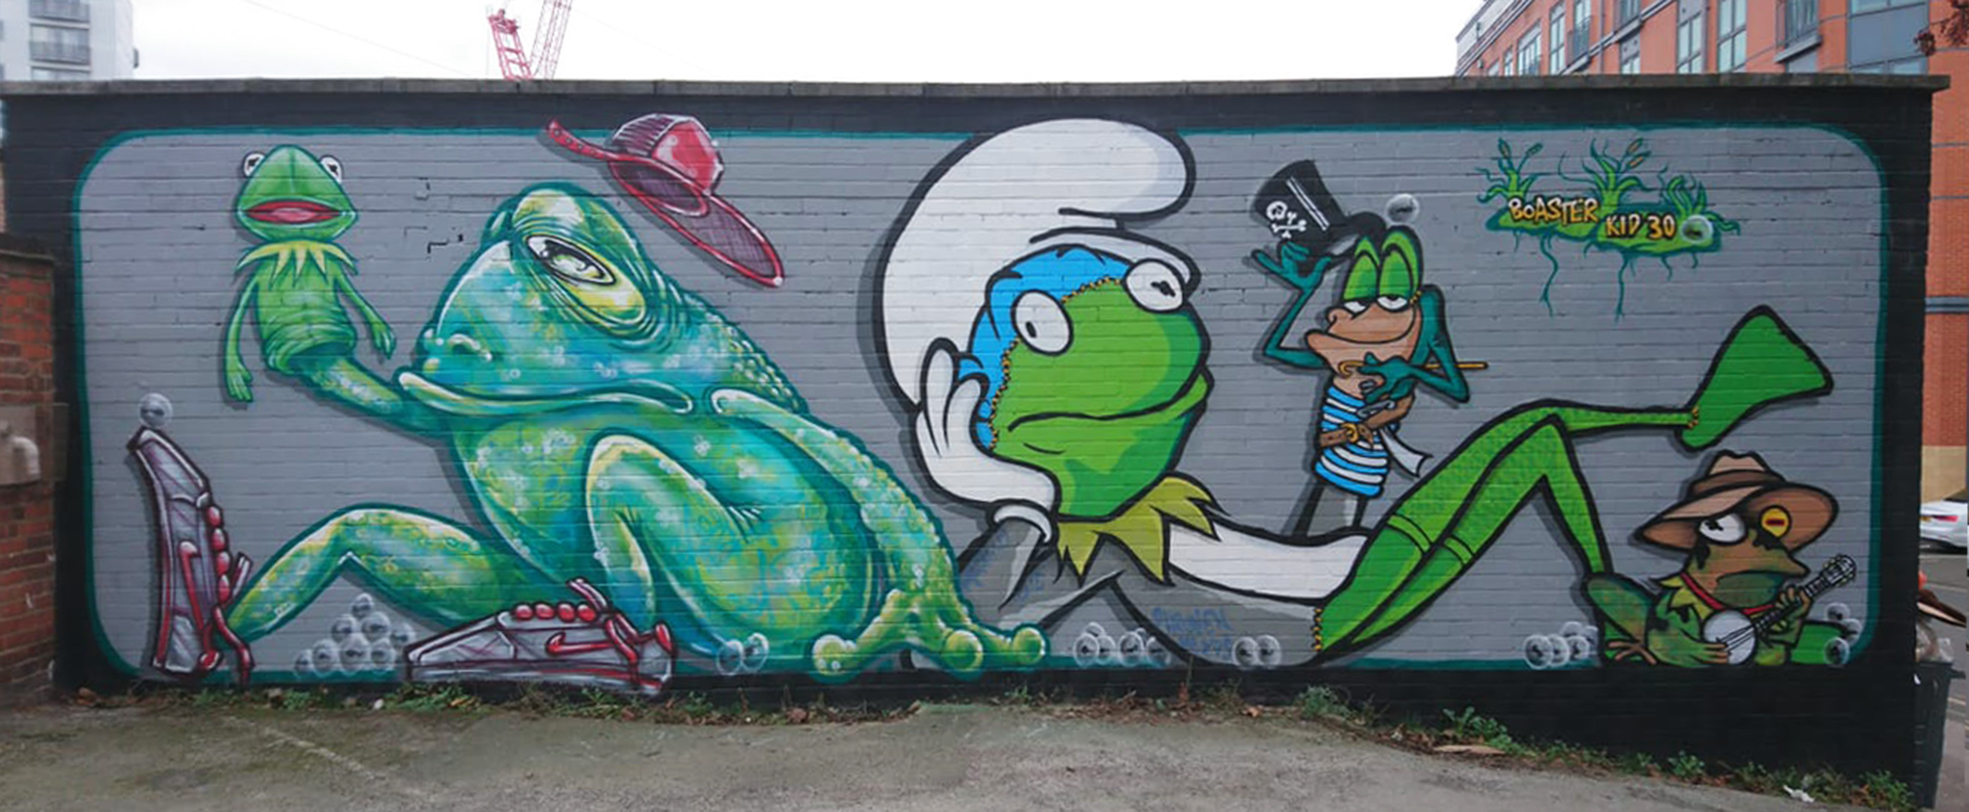 kid30 boaster nottingham streetart graffiti hockley